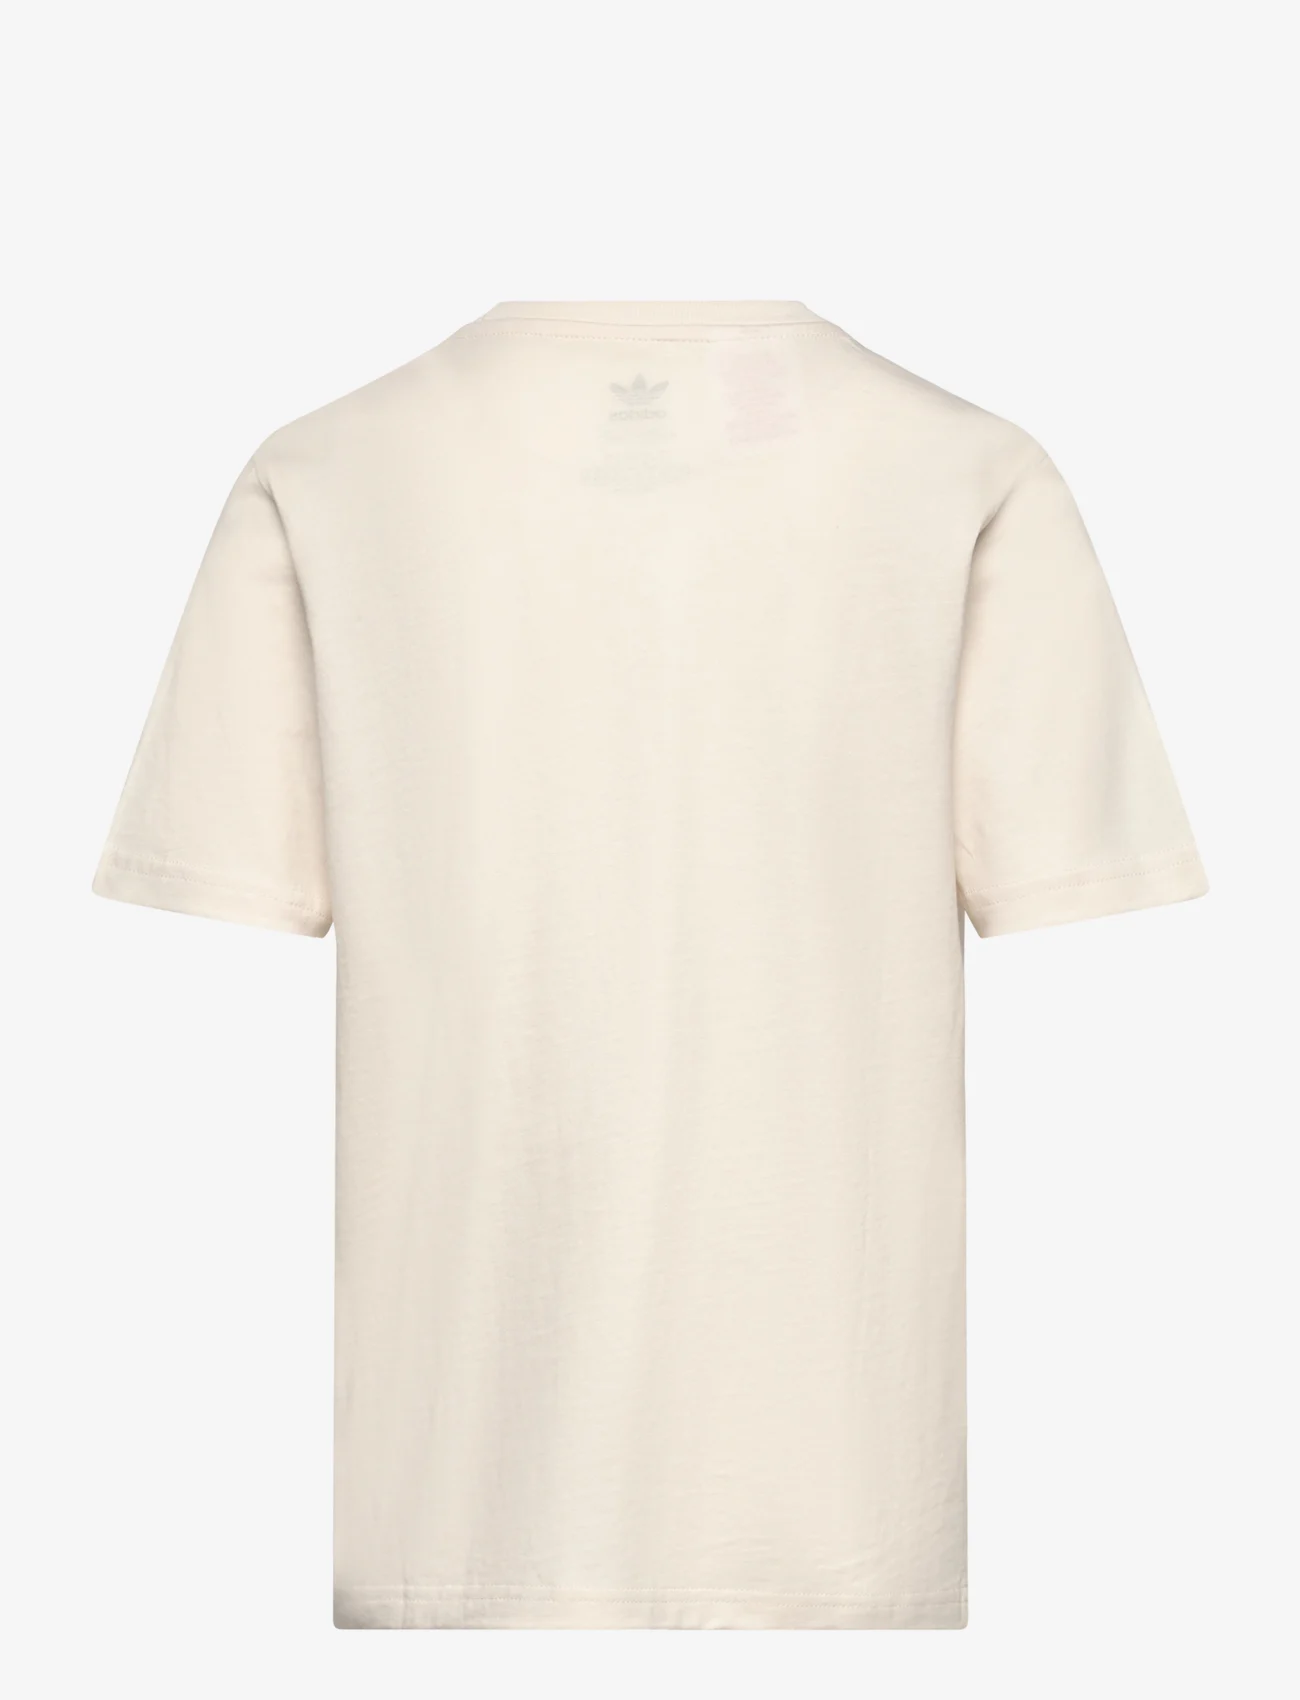 adidas Originals - TEE - short-sleeved t-shirts - wonwhi - 1